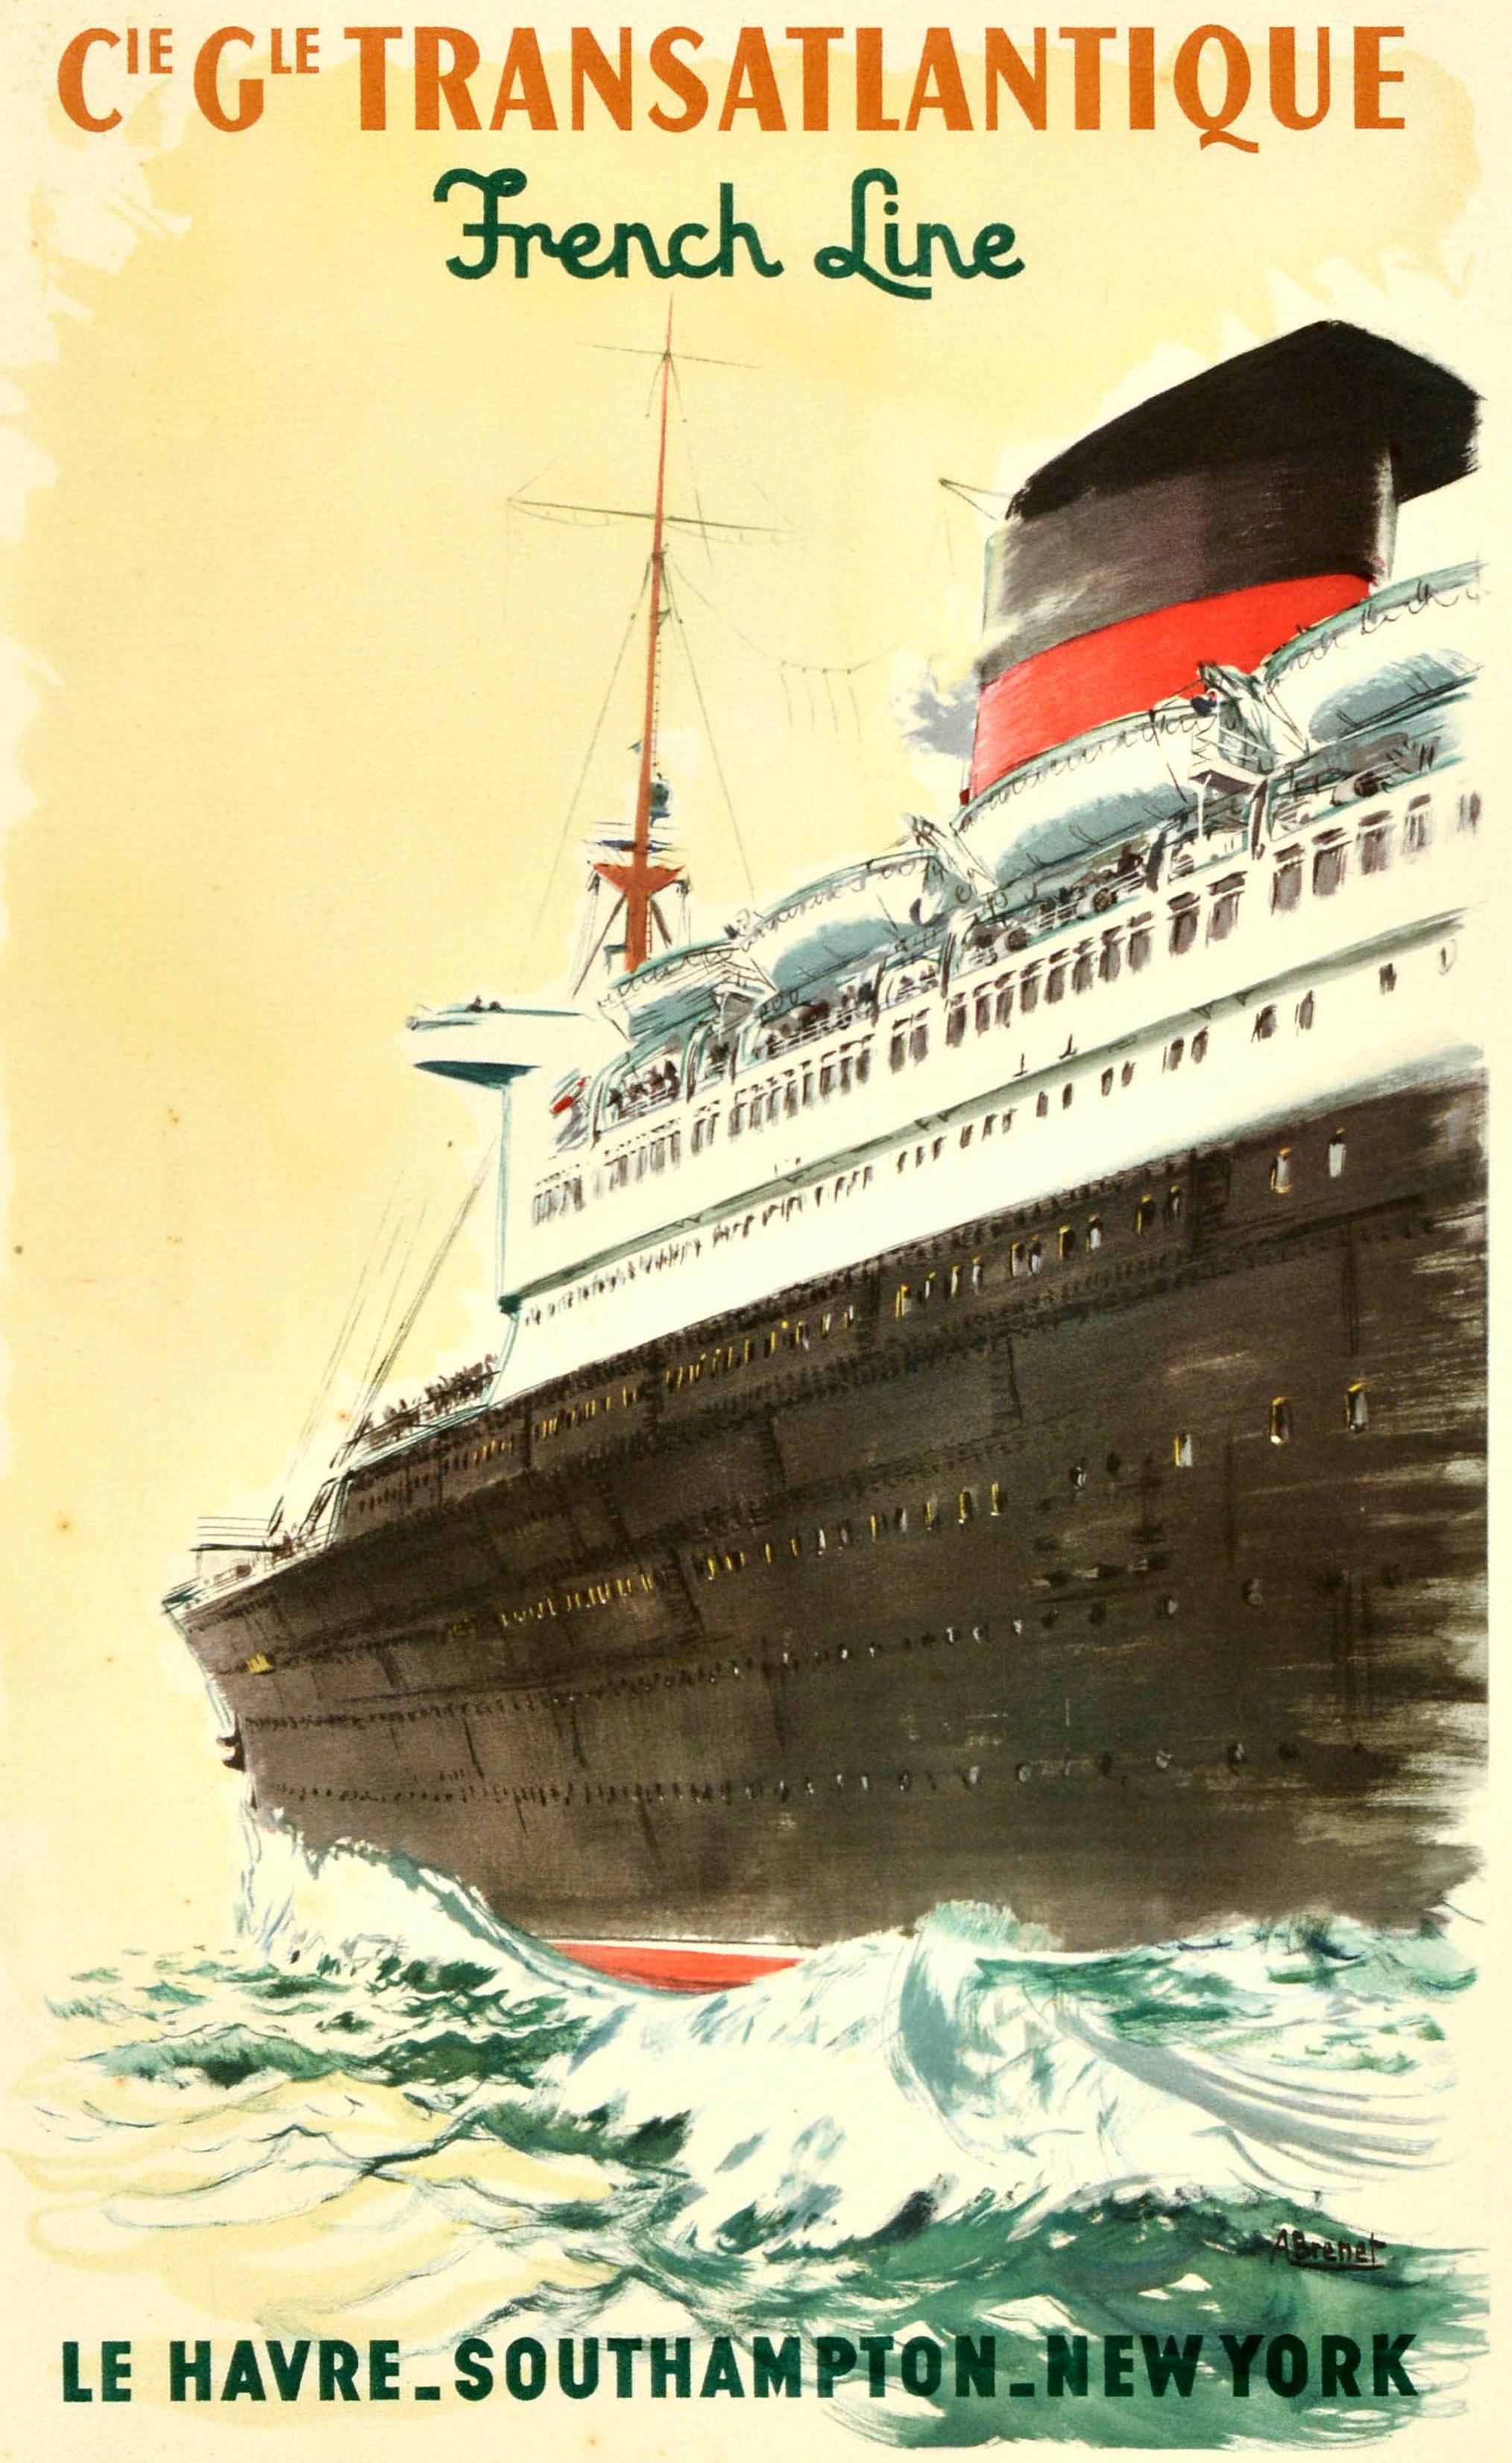 Original Vintage Travel Poster Transatlantique French Line Le Havre Southampton  - Print by Albert Brenet